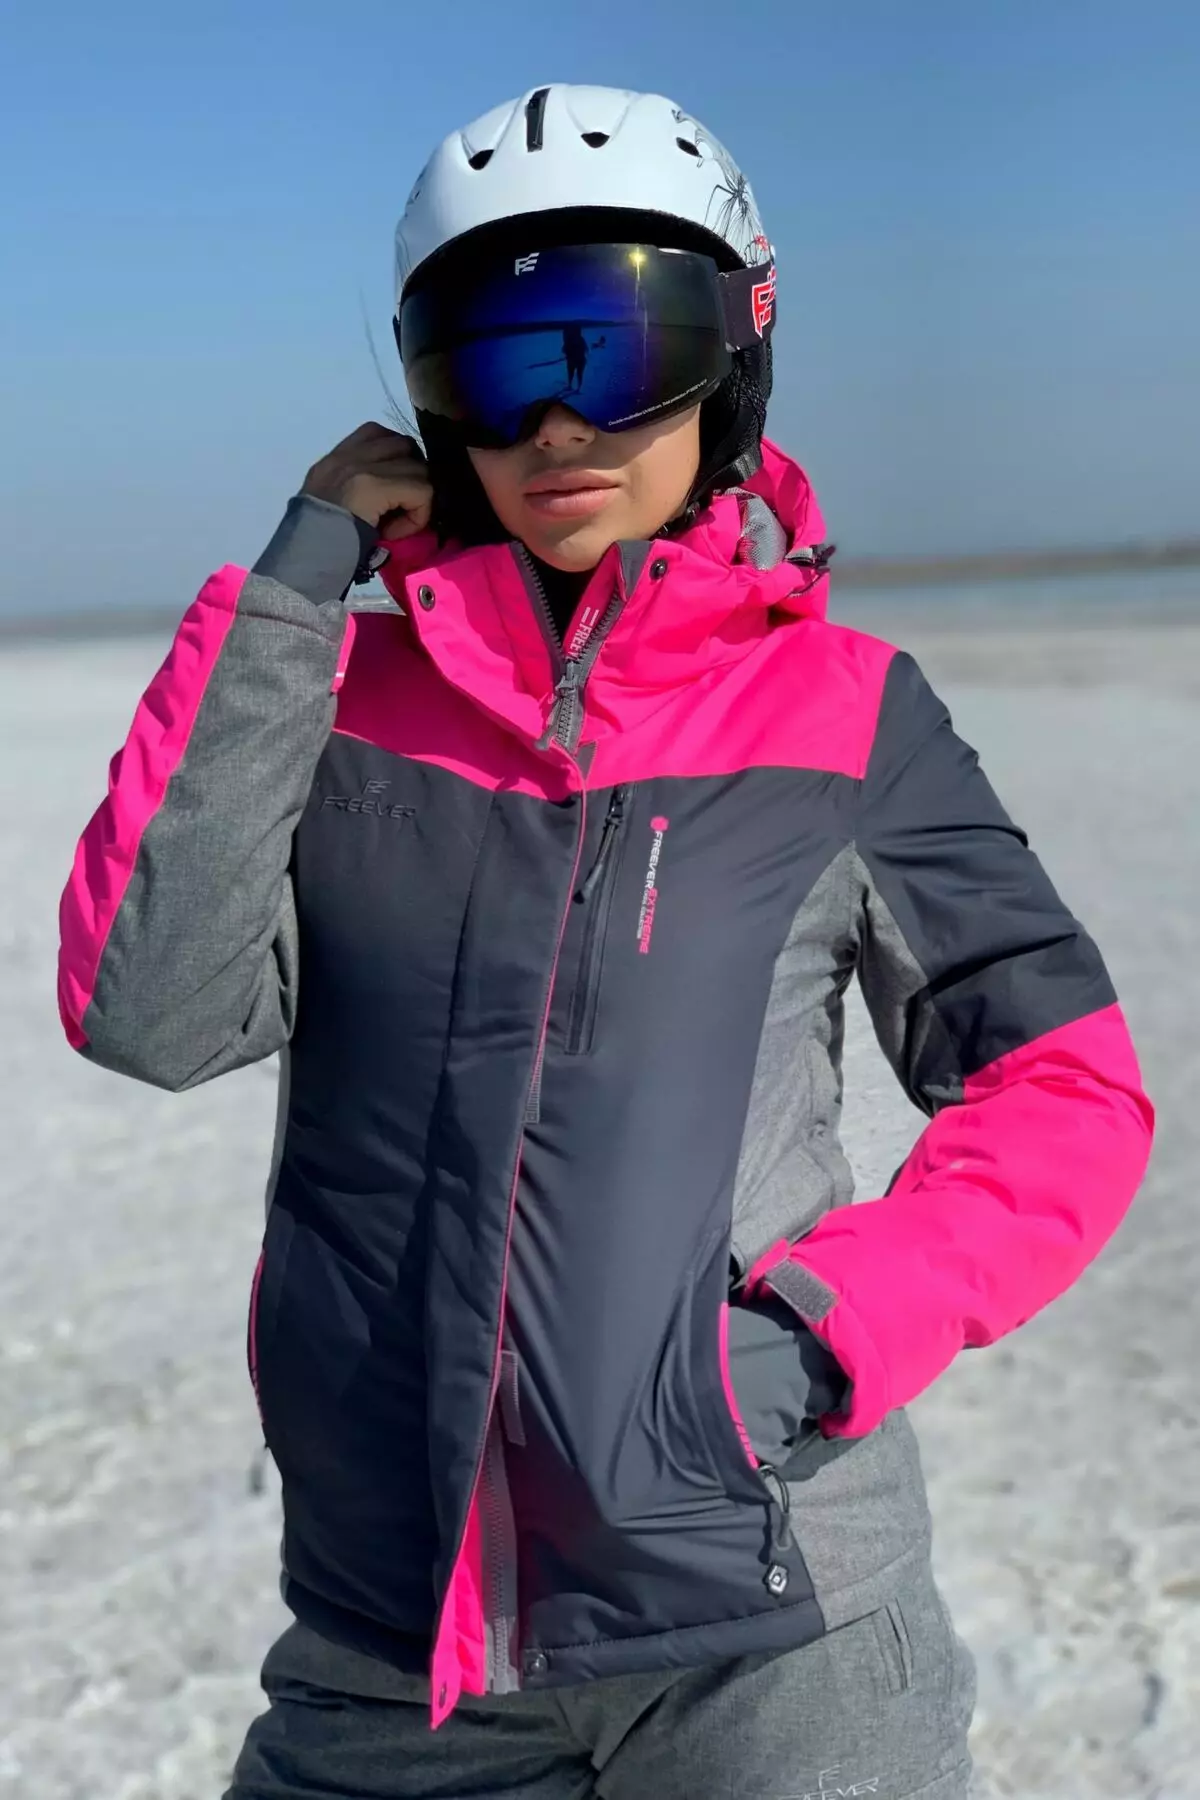 Ski Jacket: Γυναικείο χειμερινό μπουφάν για σκι αντοχής, προθέρμανση παιδιών και ενήλικες σακάκι σκιέρ. Πώς να επιλέξετε για πατινάζ; 20201_27